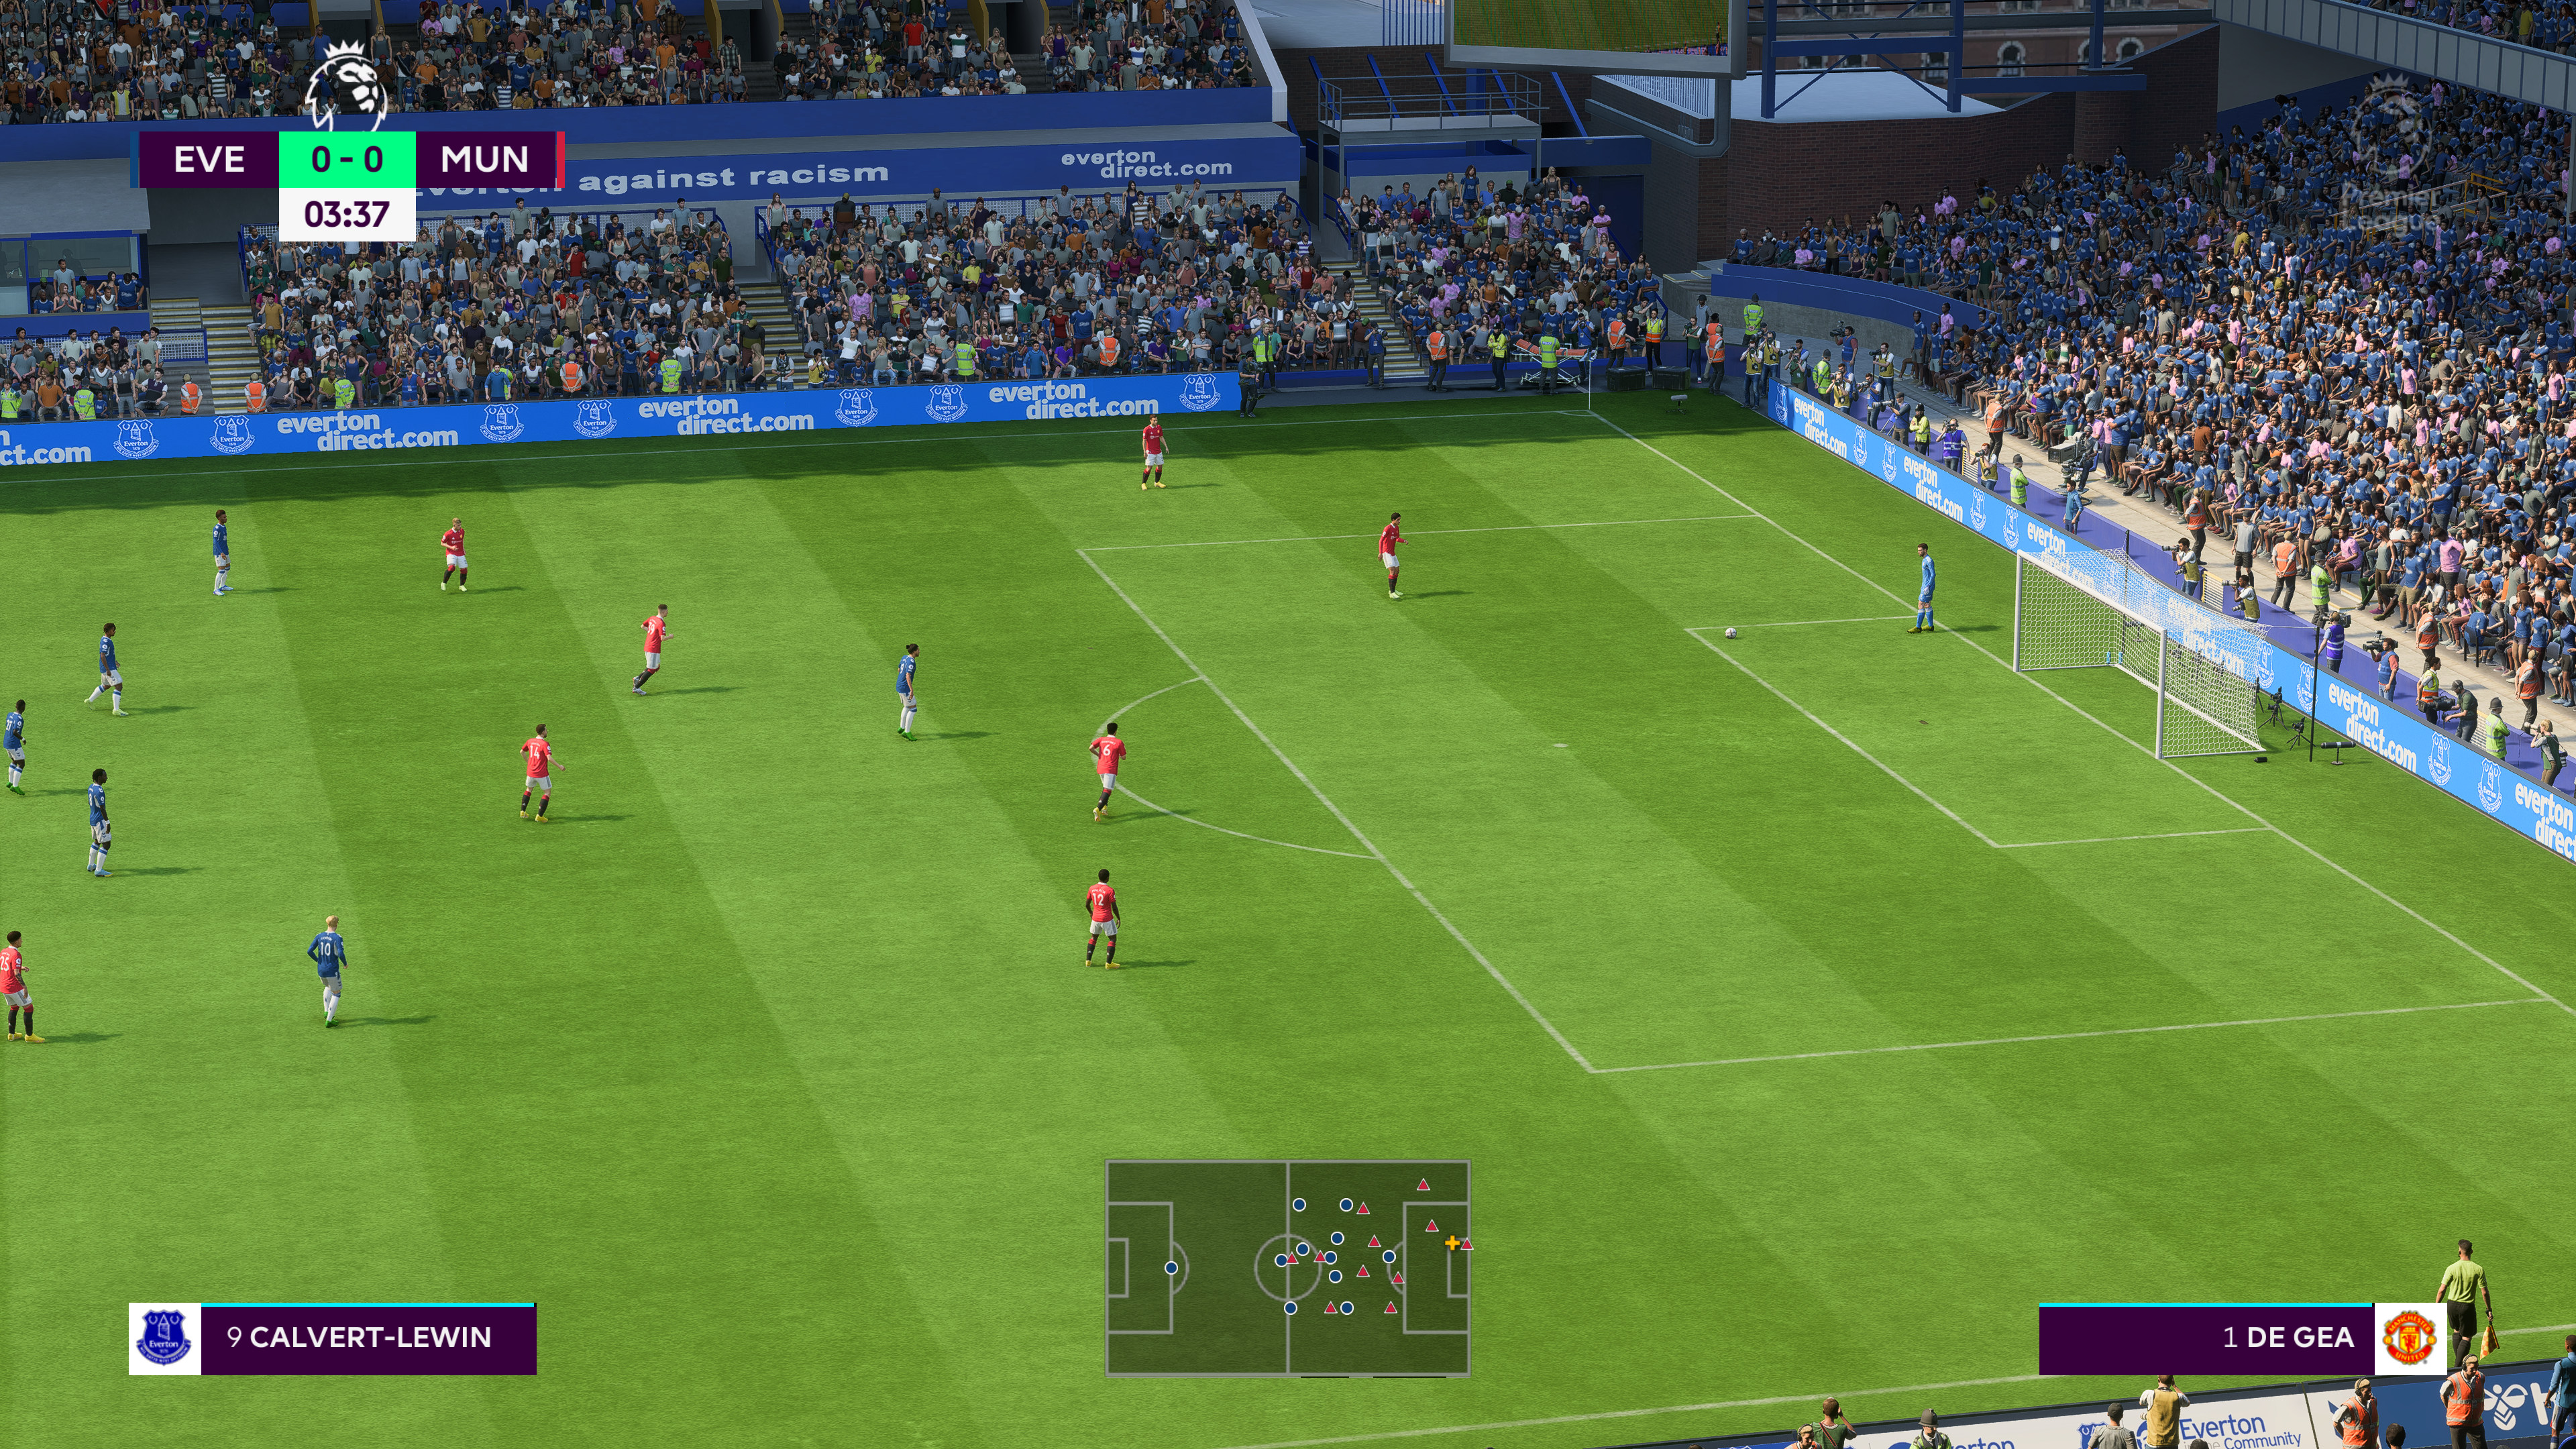 FIFA 23 PC Performance Analysis